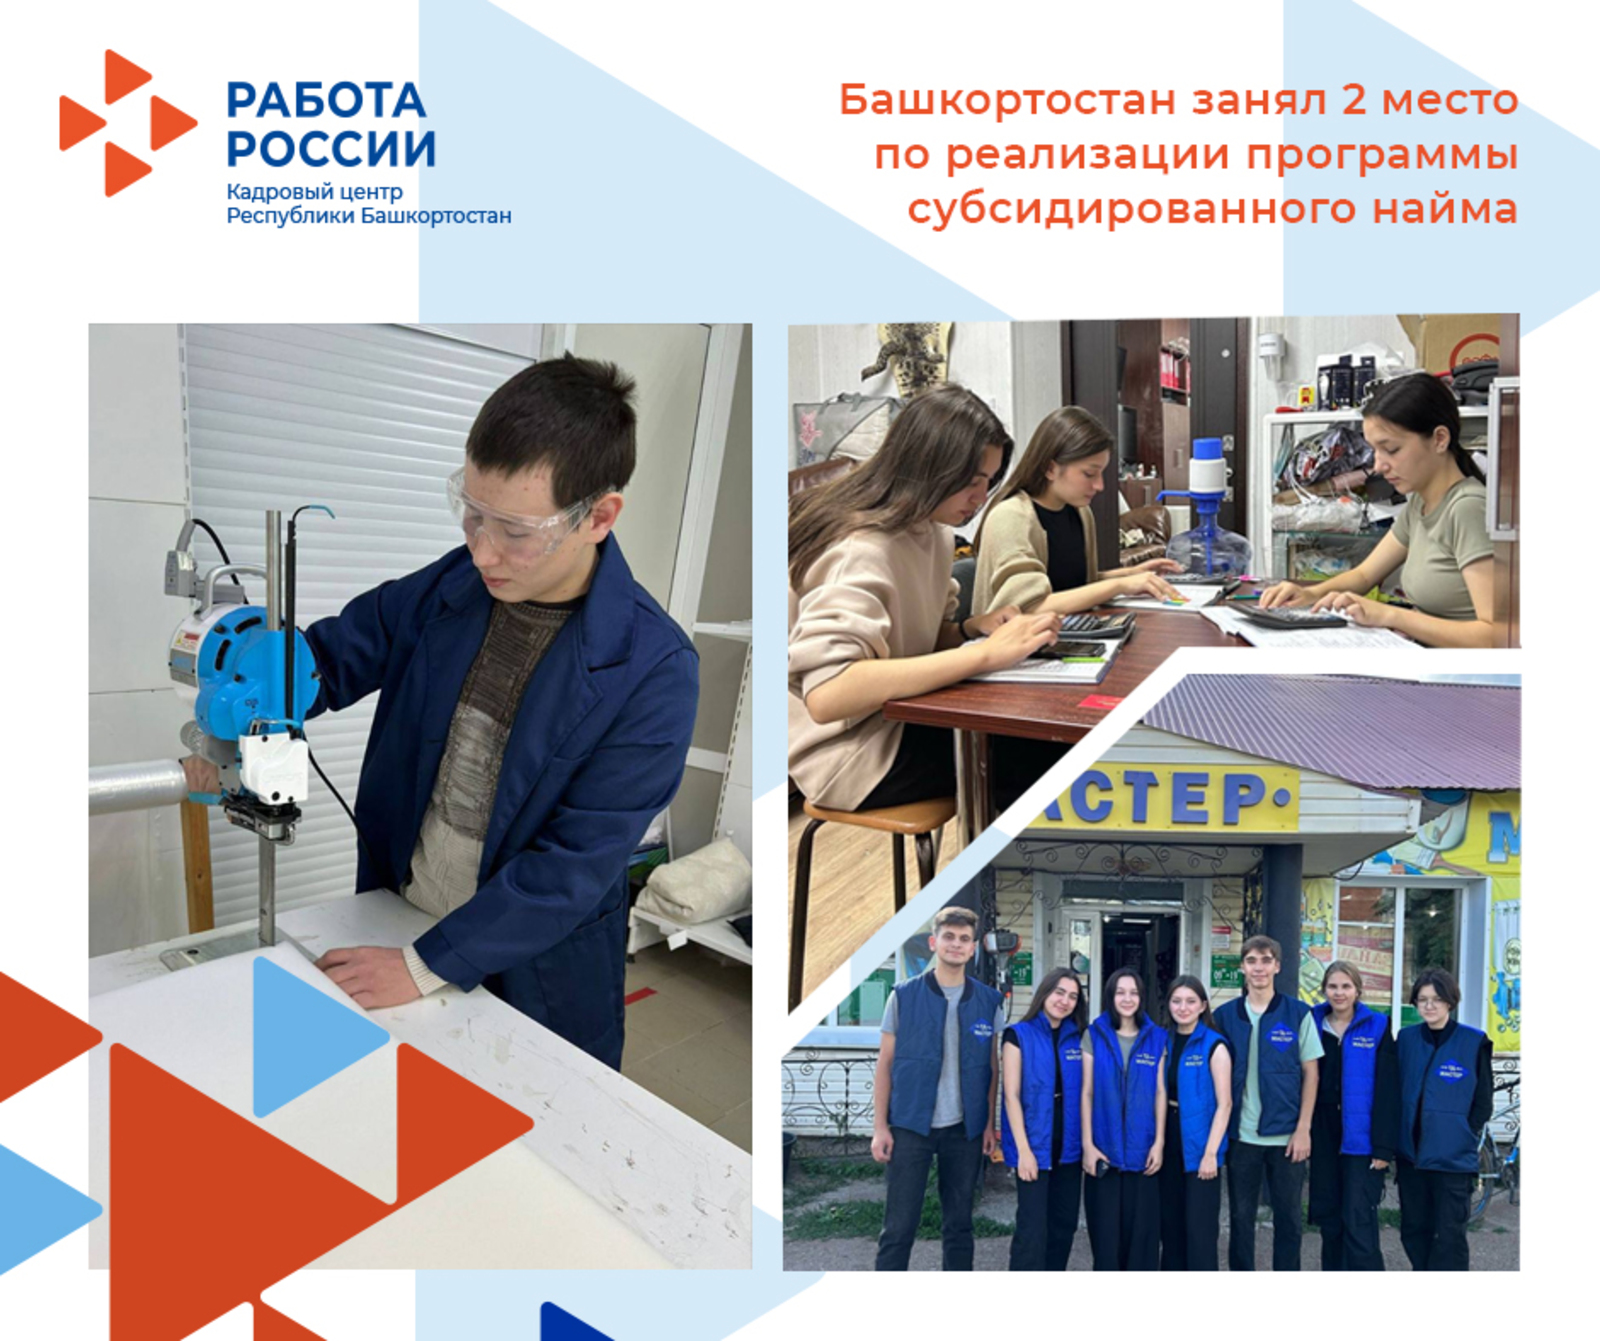 Башкортостан занял 2 место в стране по реализации программы субсидированного найма